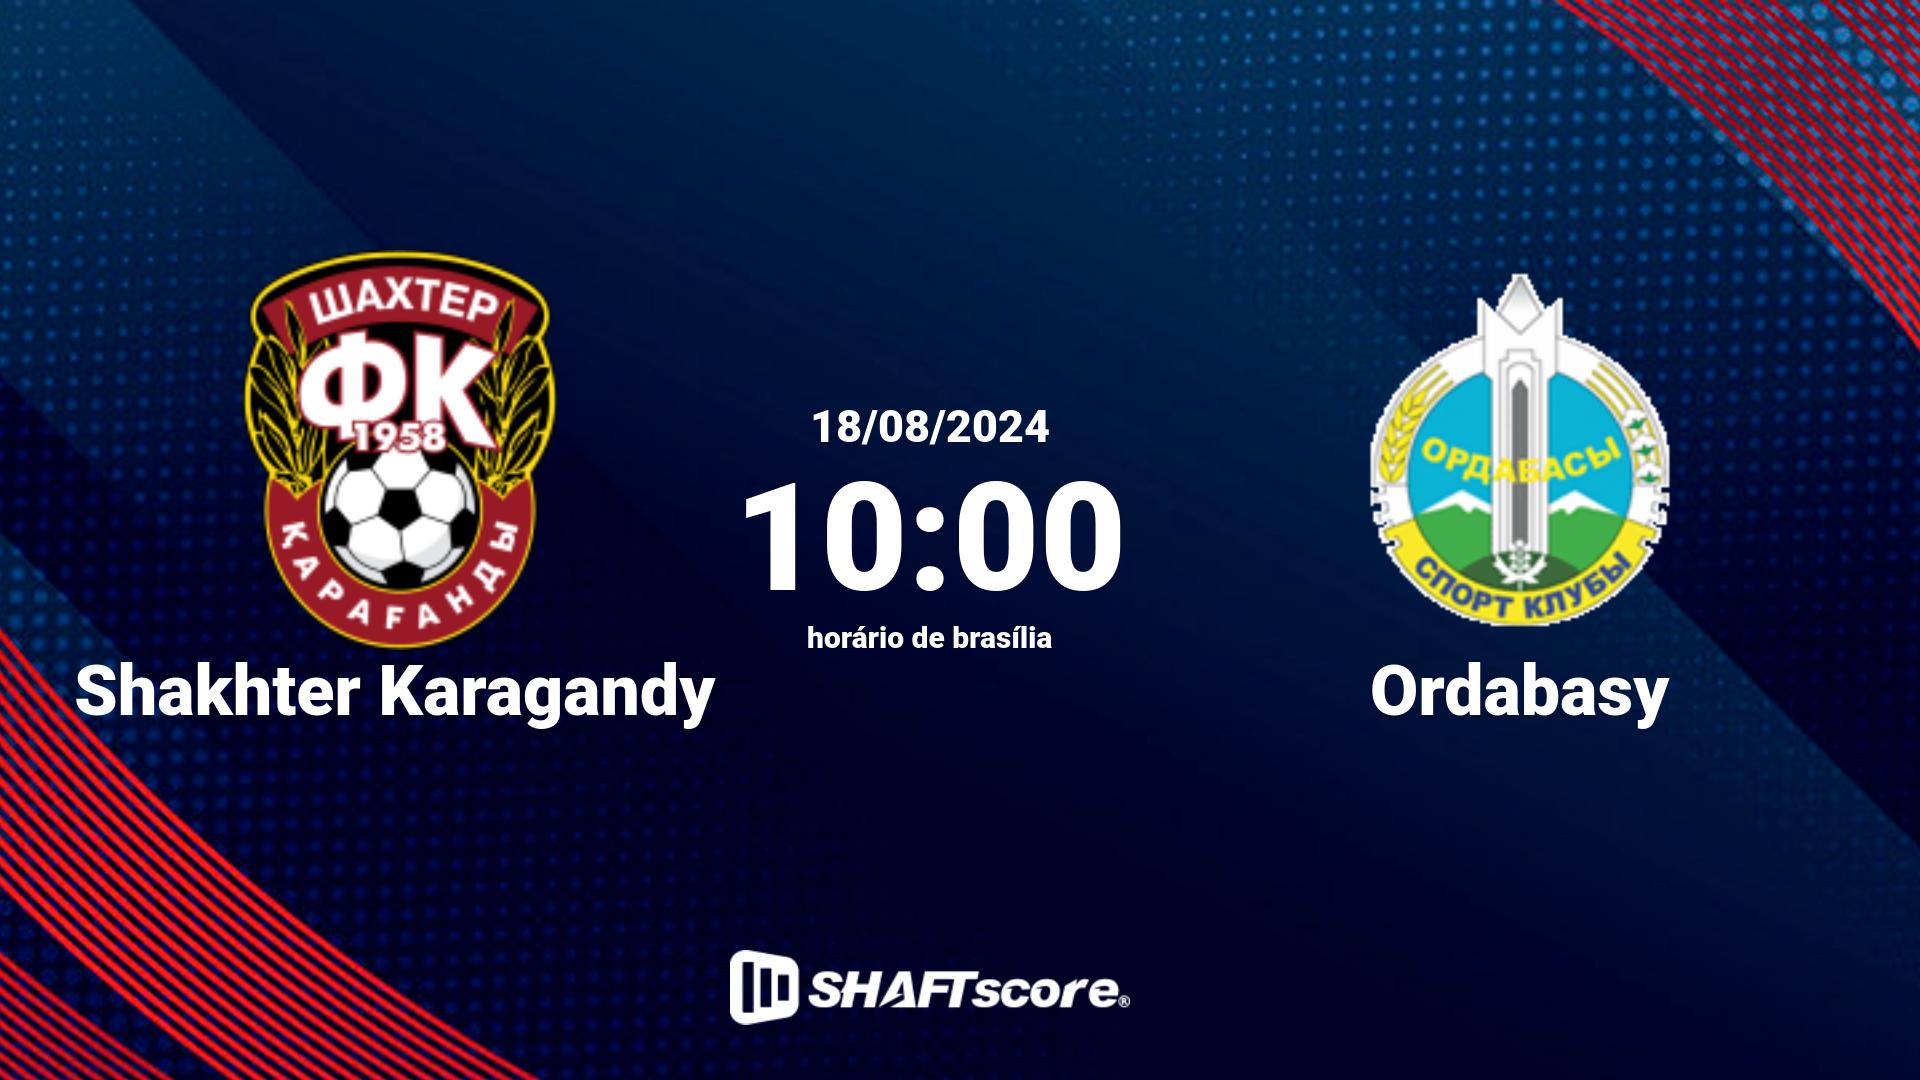 Estatísticas do jogo Shakhter Karagandy vs Ordabasy 18.08 10:00